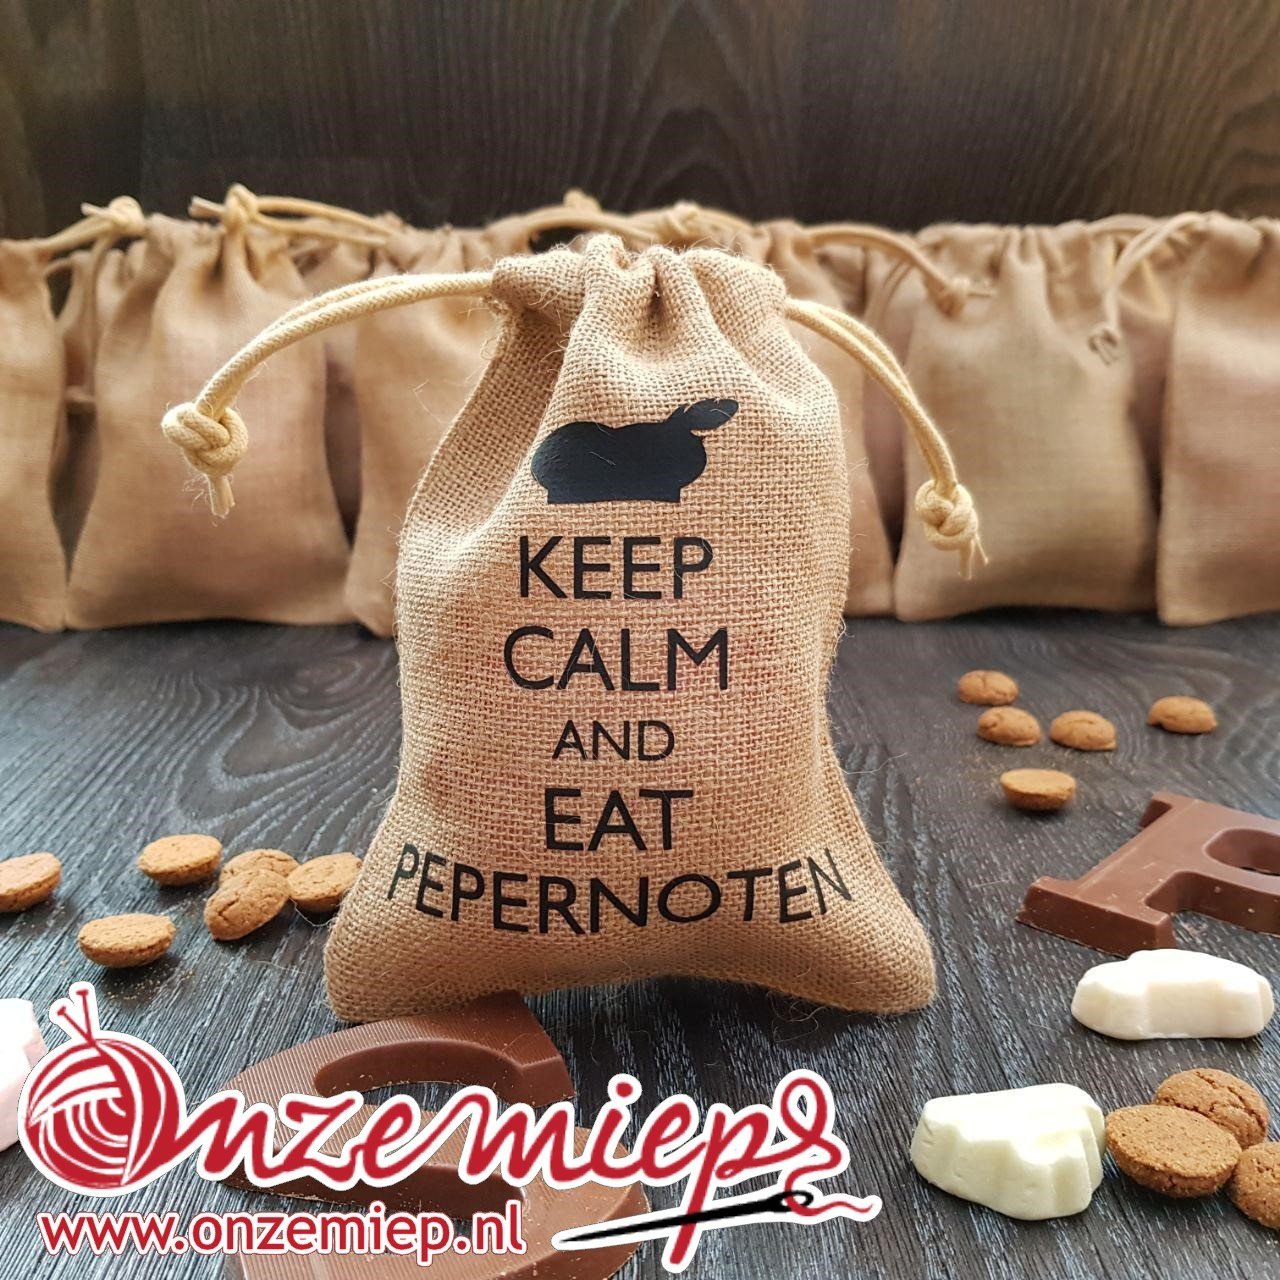 Pepernotenzakje met de tekst "Keep calm and eat pepernoten"